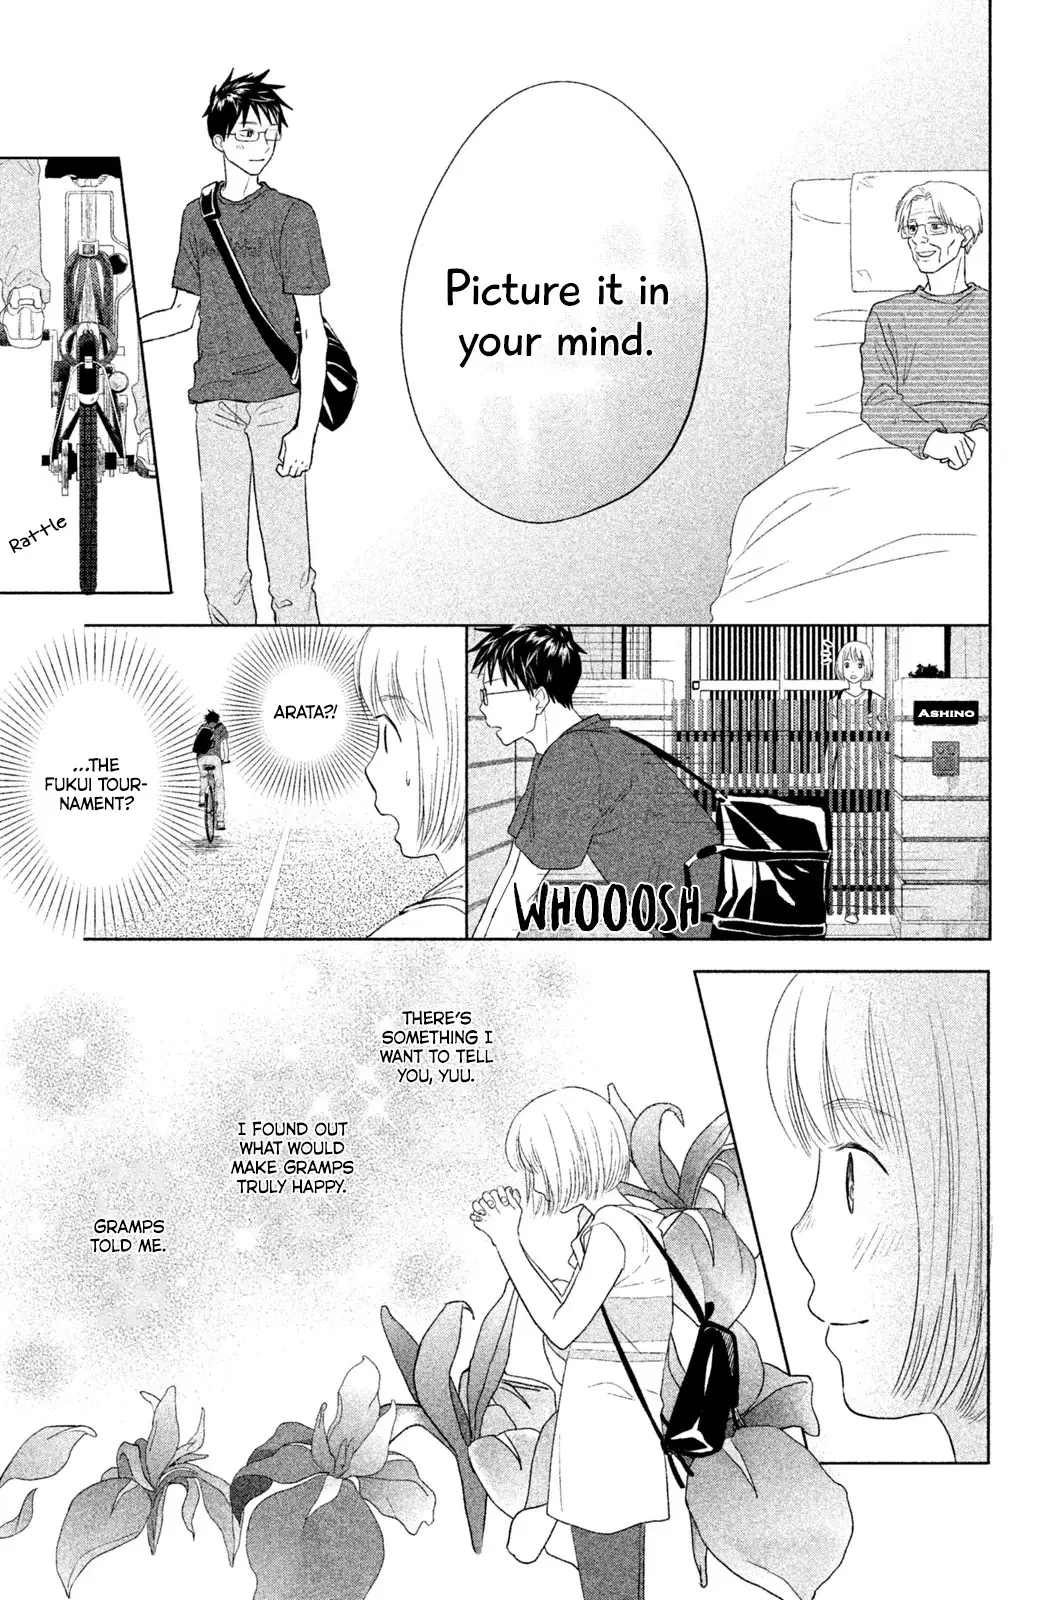 Chihayafuru: Middle School Arc - 9 page 24